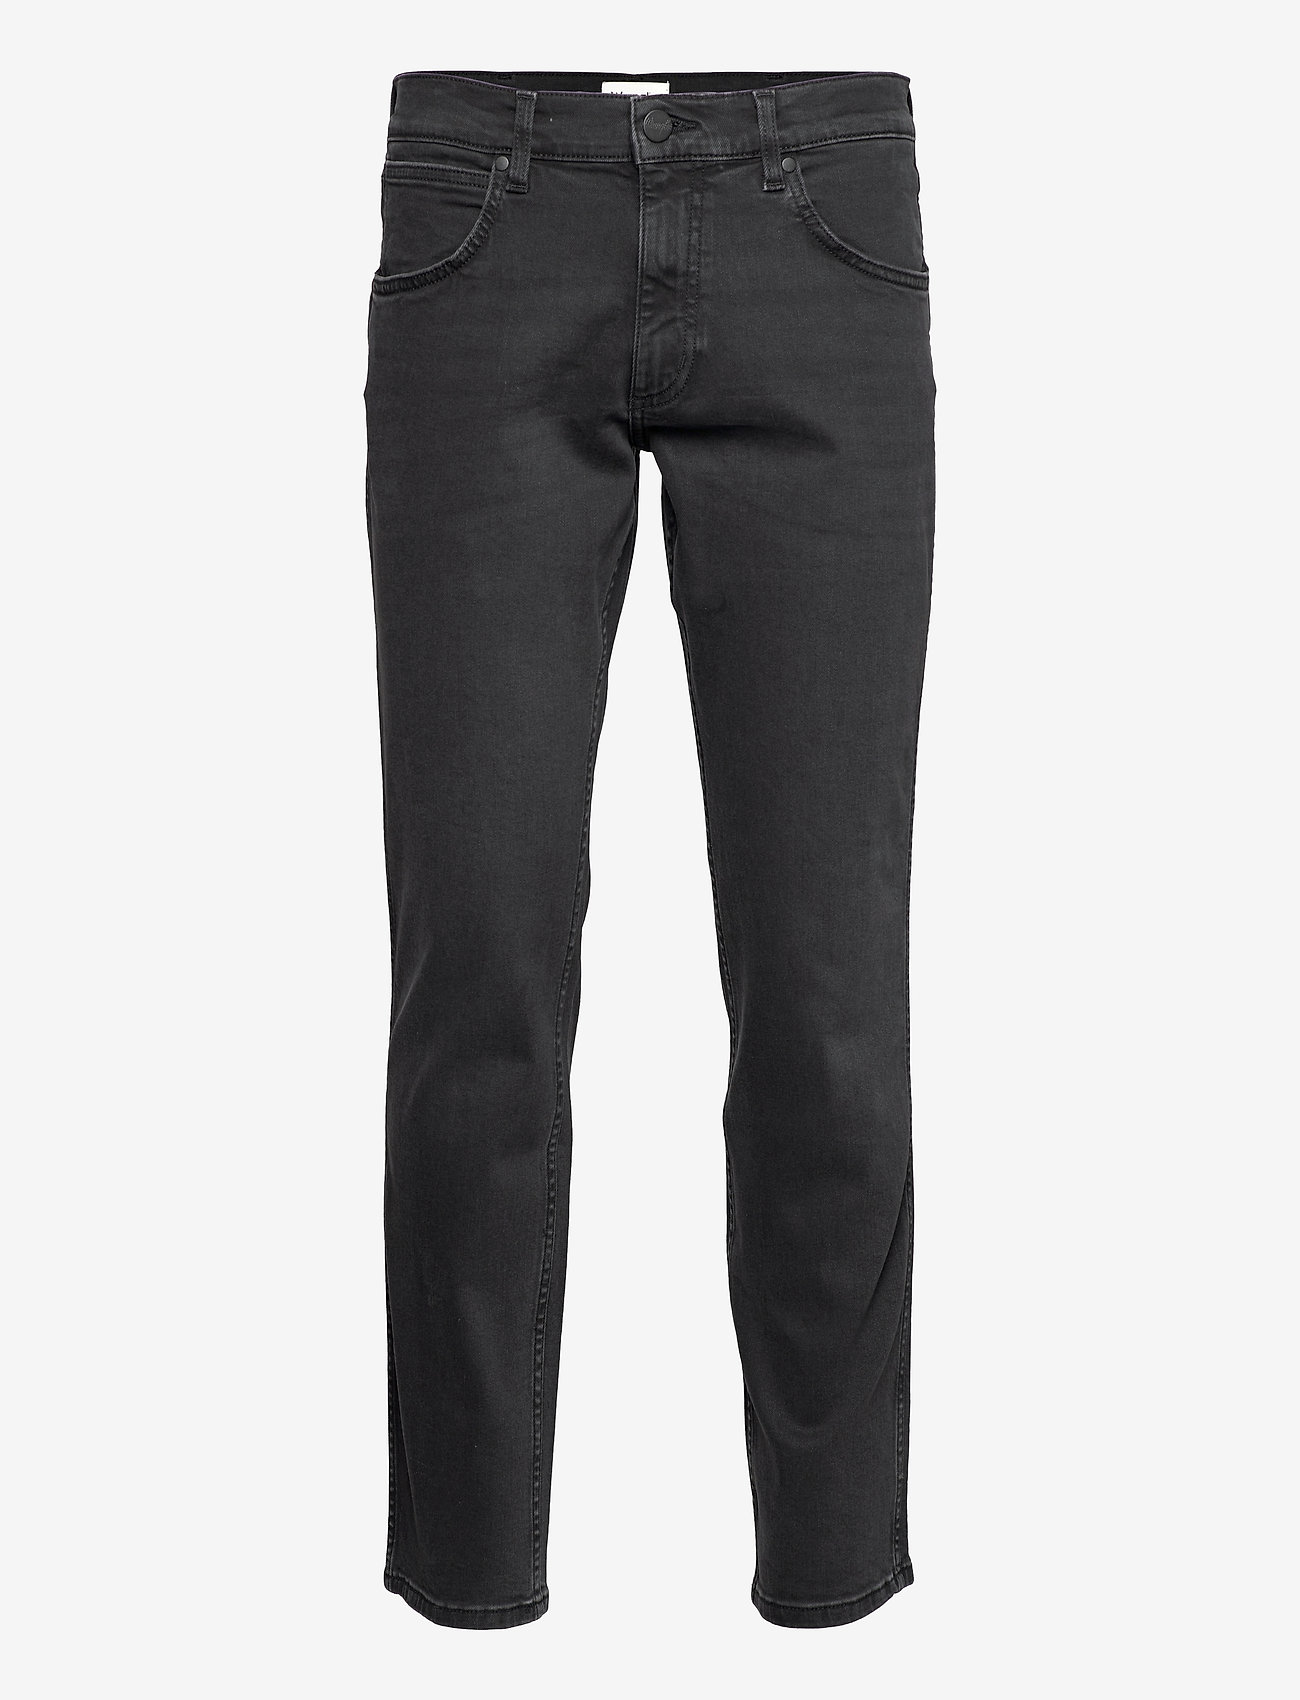 Wrangler - GREENSBORO - regular jeans - black crow - 0